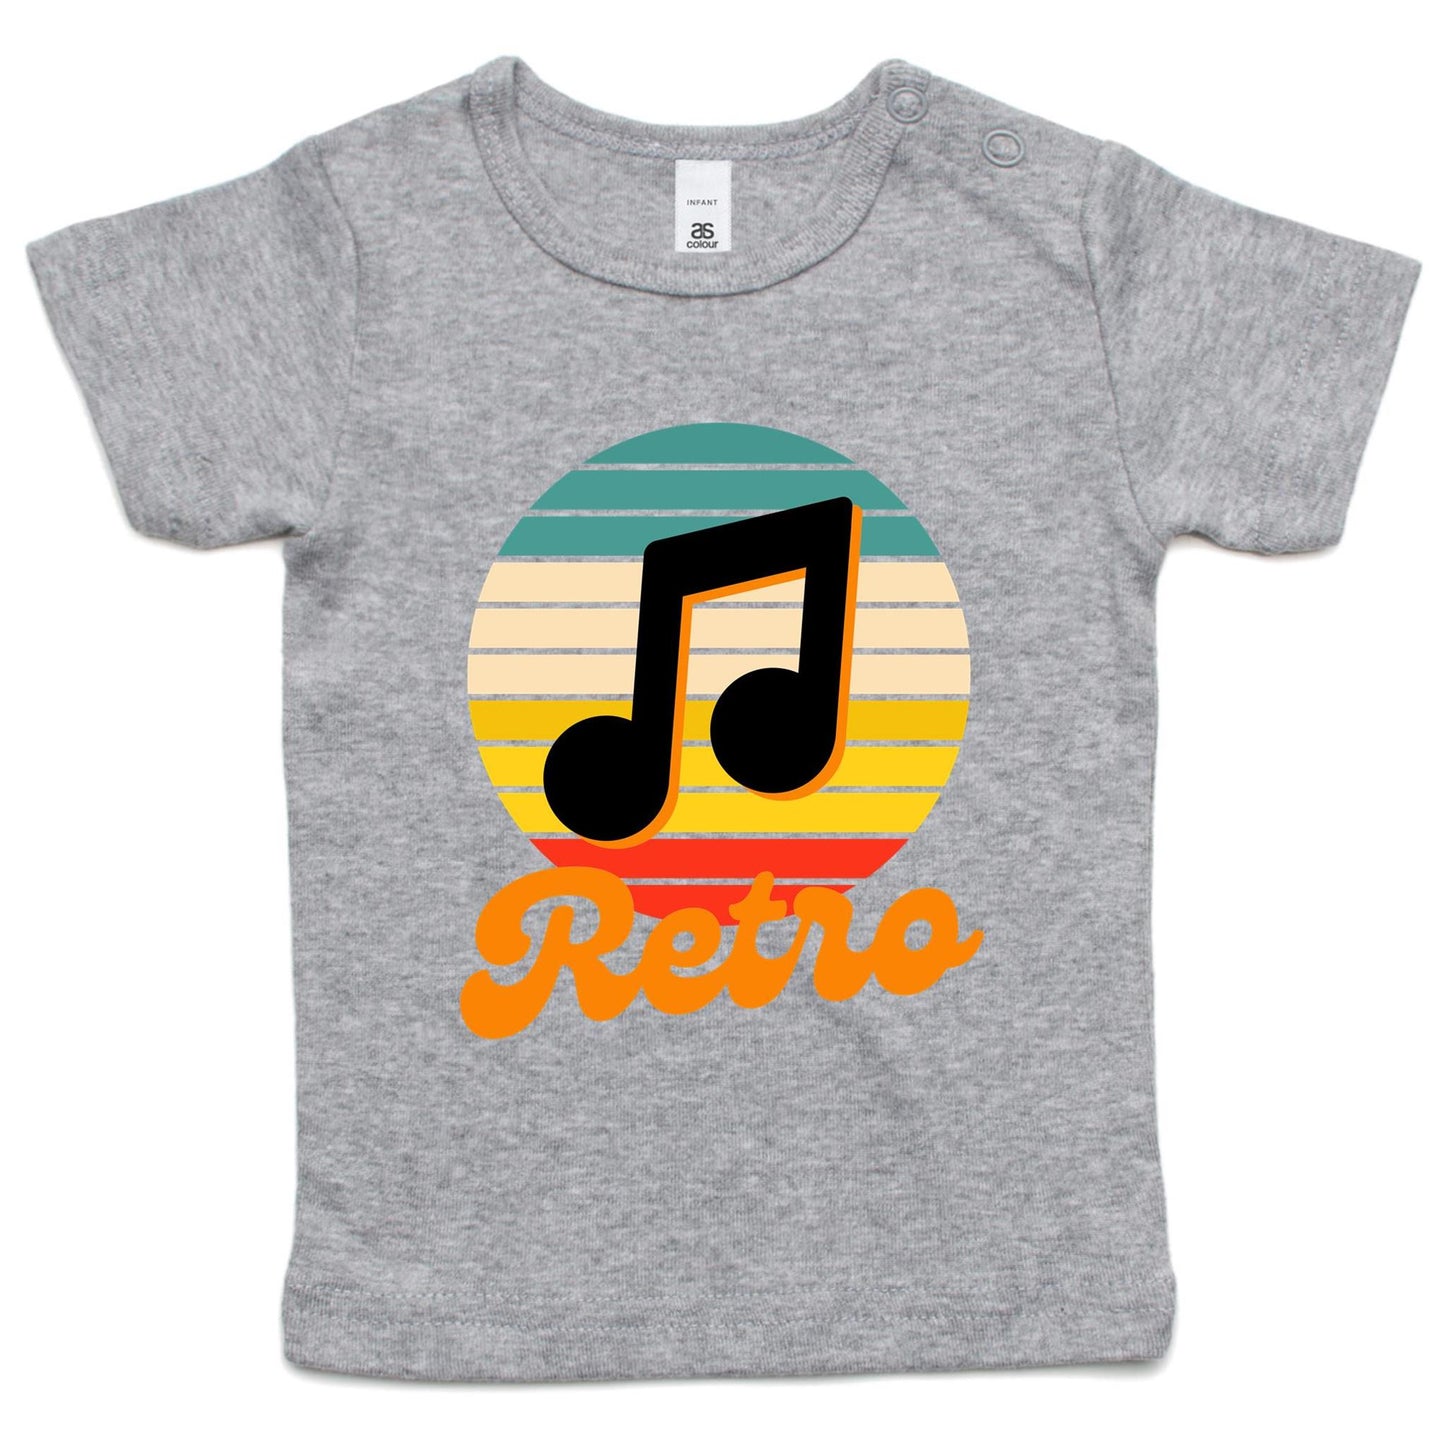 Retro Baby T-shirt Grey Marle Baby T-shirt Retro